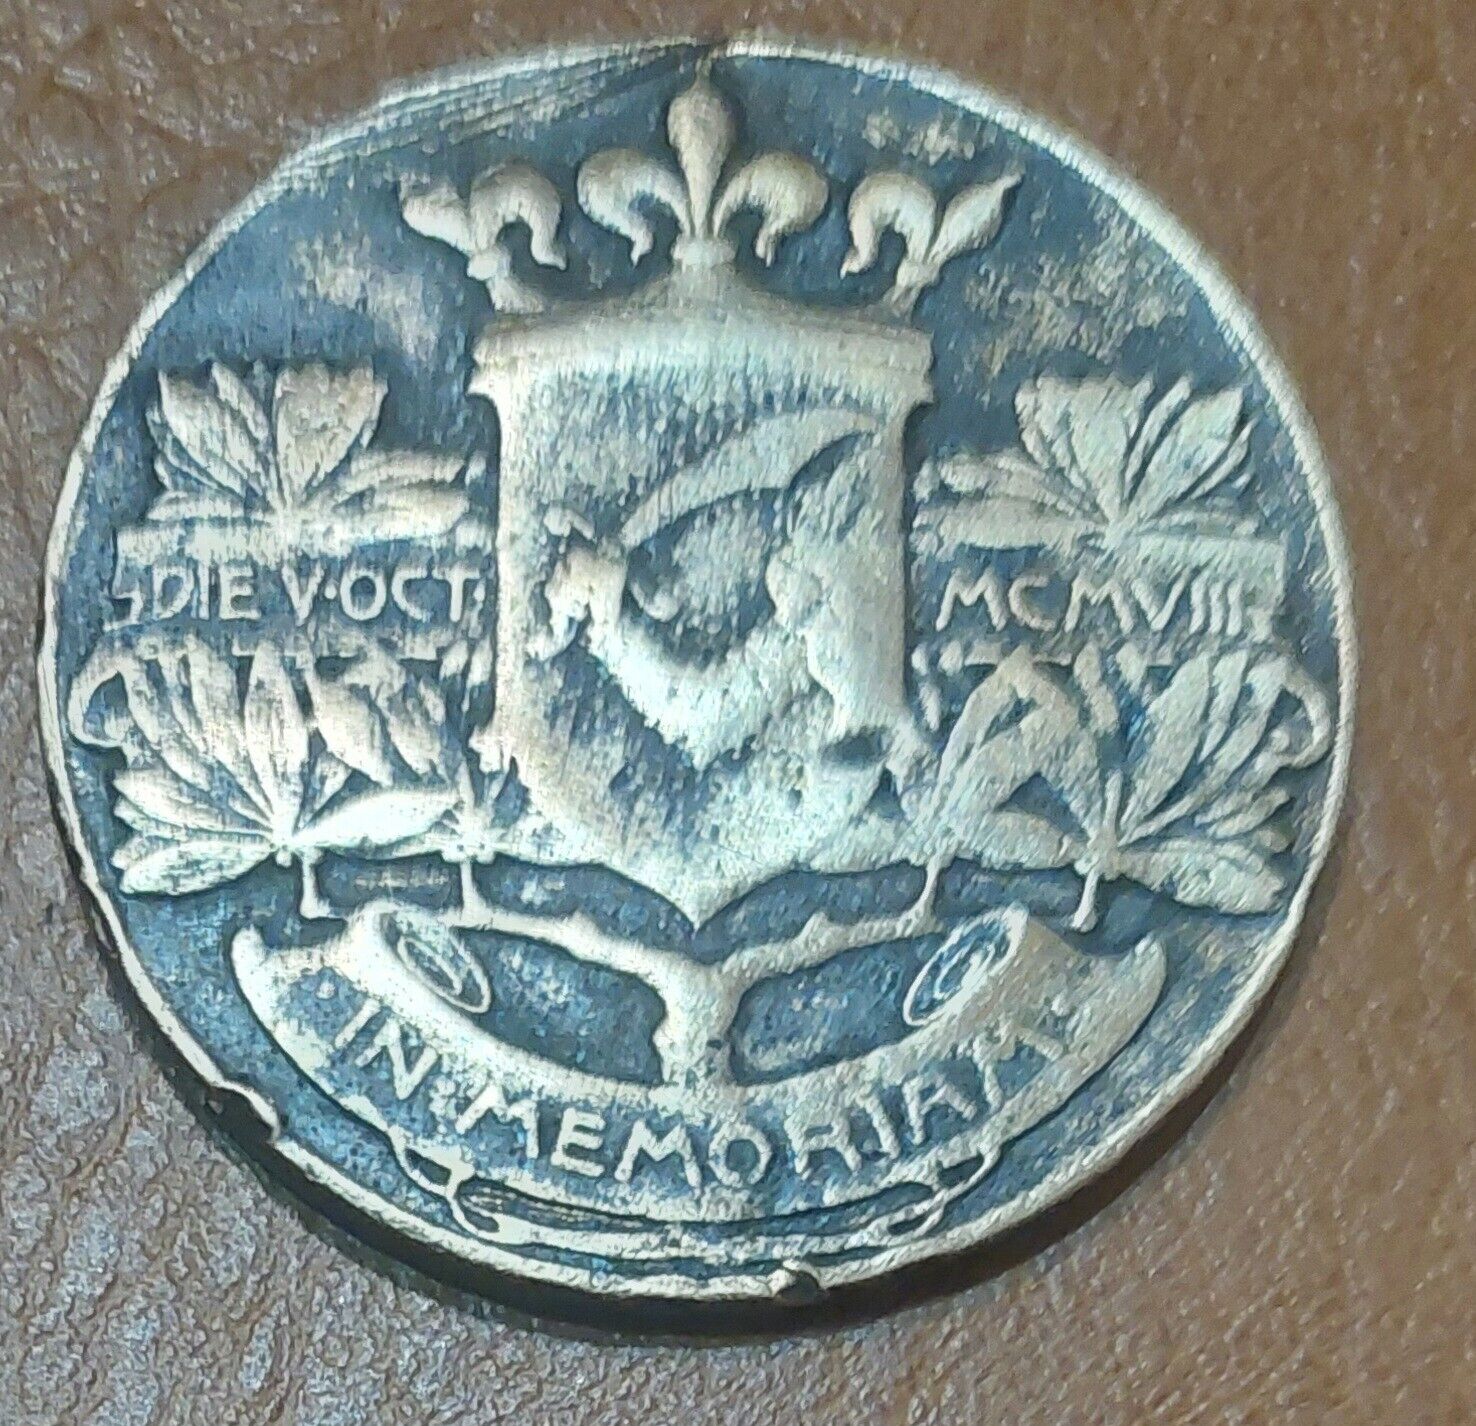 Bosnia Medal-1909-Franz Joseph I-One year after anexation-1908- Jubilee-Original